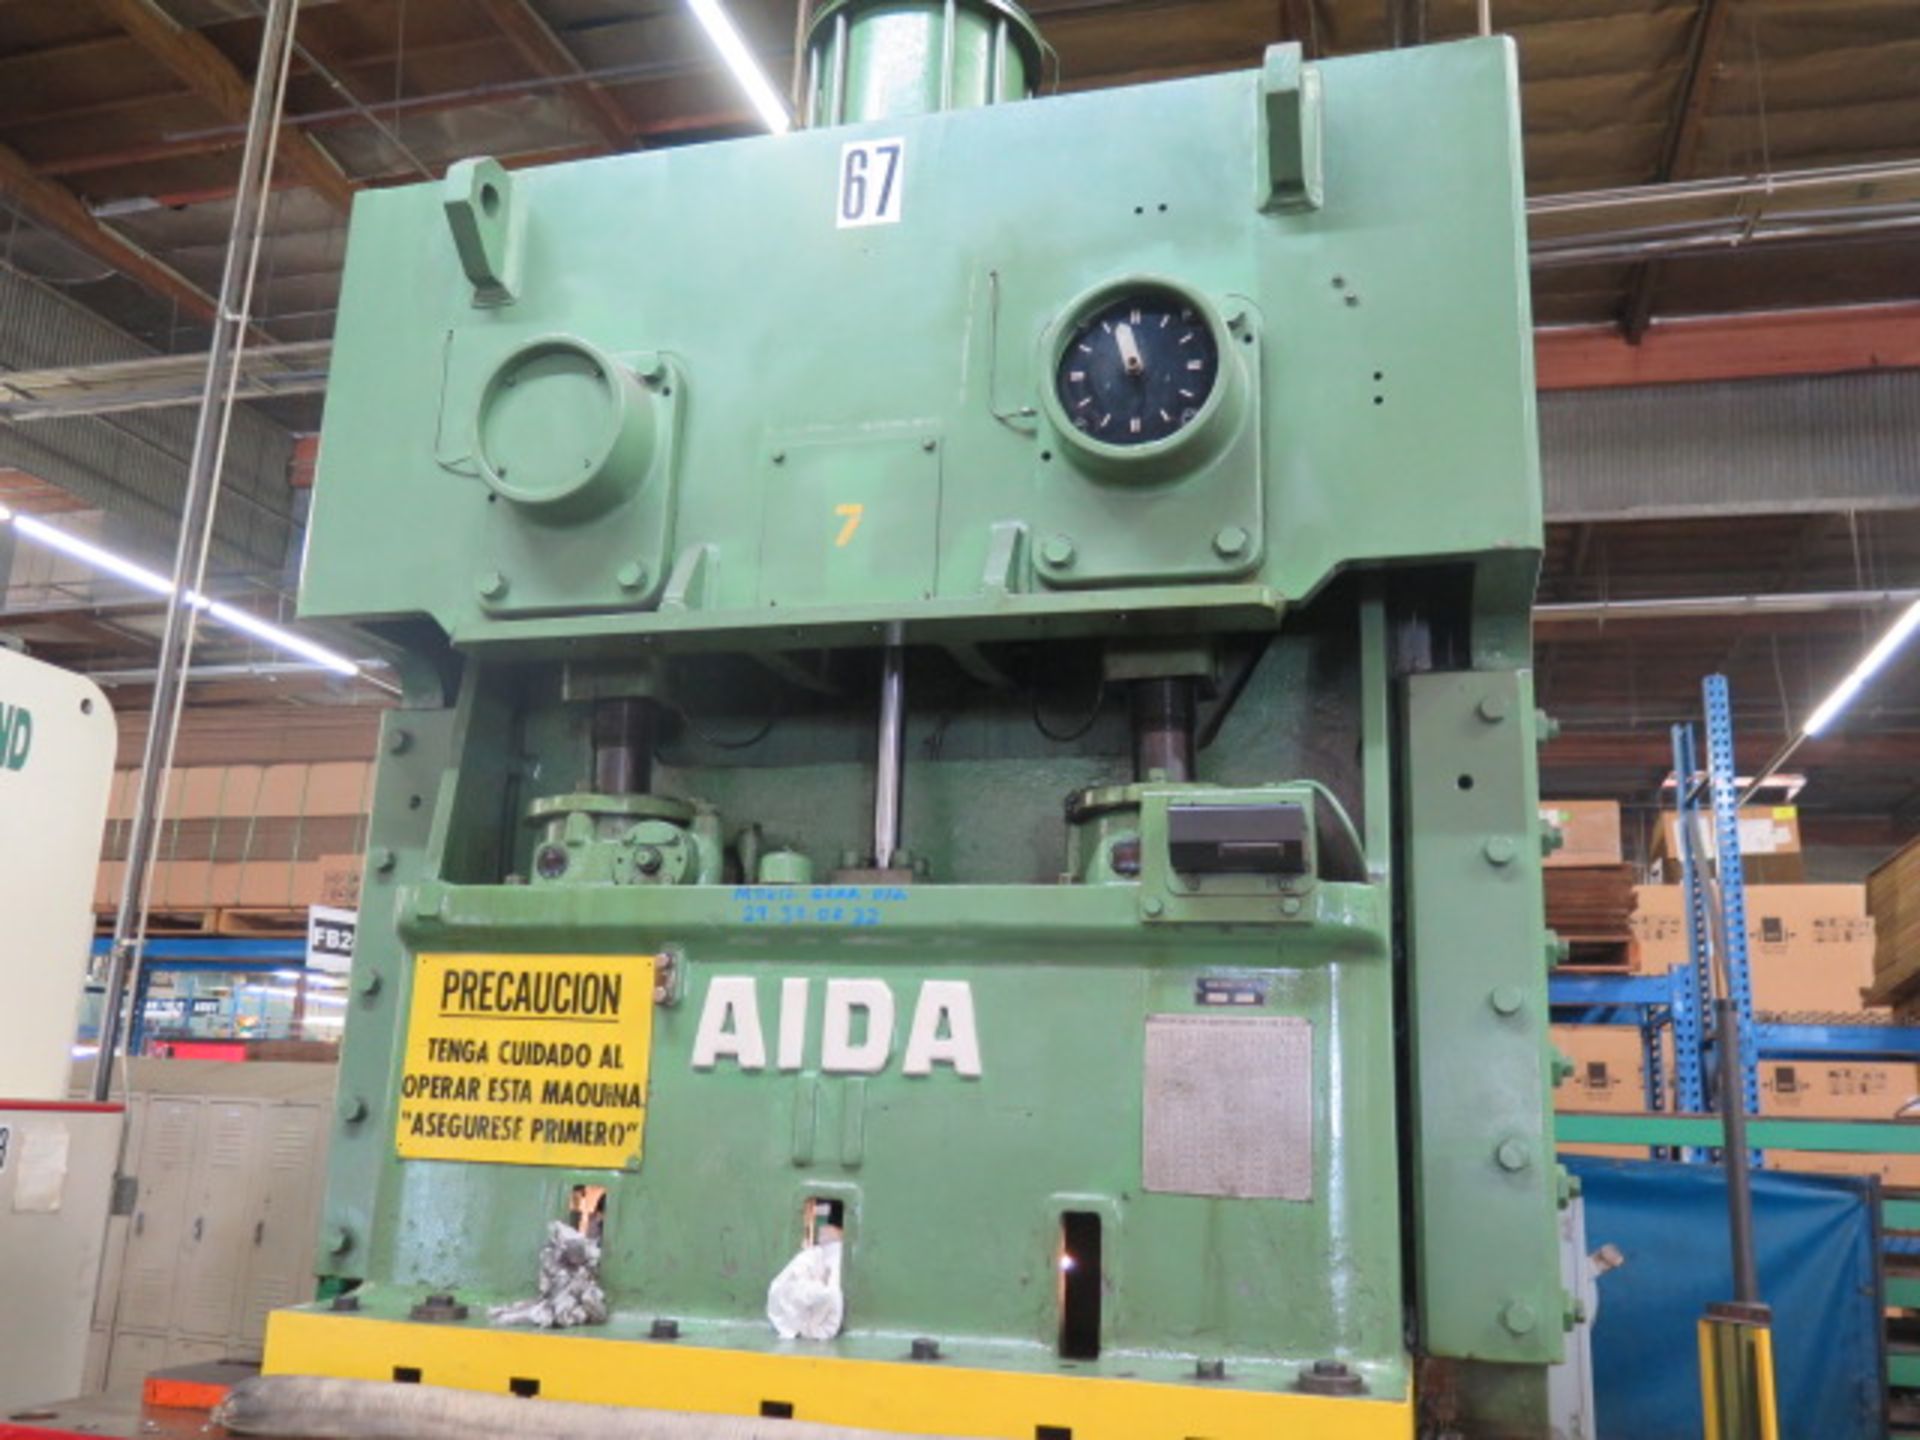 Aida C2-11(2) 110 Ton Hydfraulic Gap Frame Stamping Press s/n 10511-0454 w/Aida Controls, SOLD AS IS - Image 7 of 18